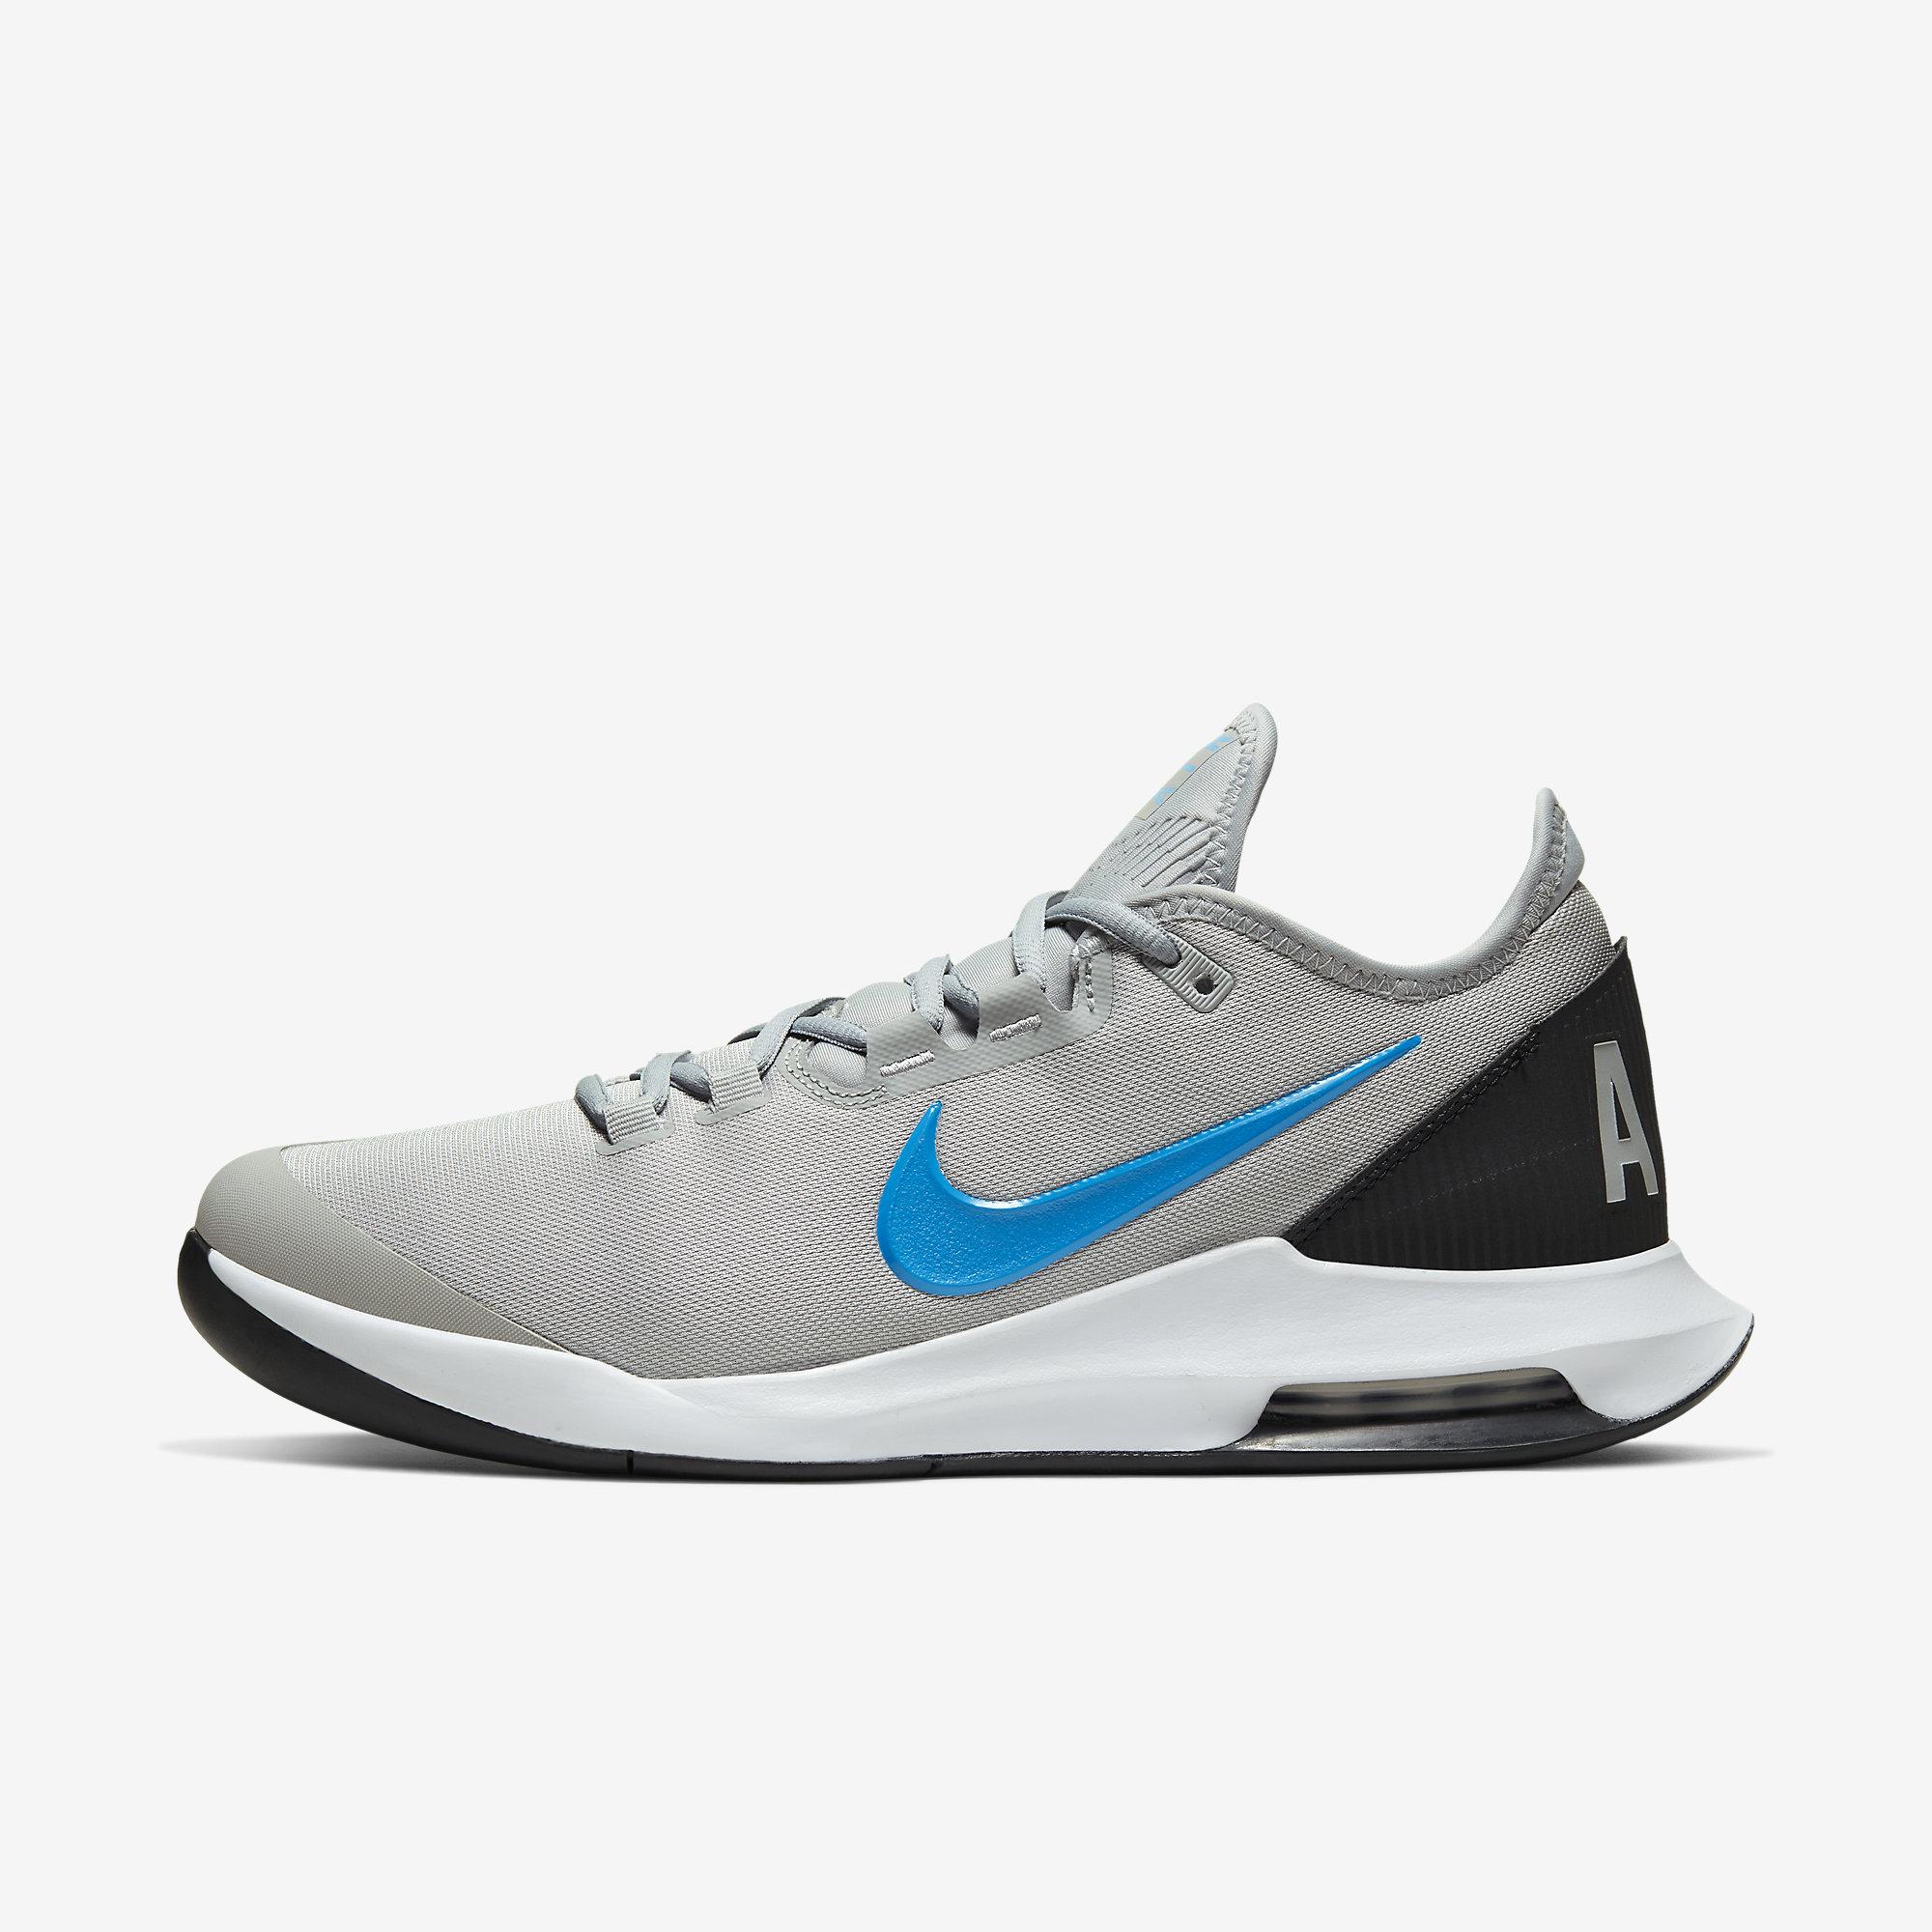 alguna cosa Restaurar Lubricar Nike Mens Air Max Wildcard Tennis Shoes - Grey/Blue/Black - Tennisnuts.com